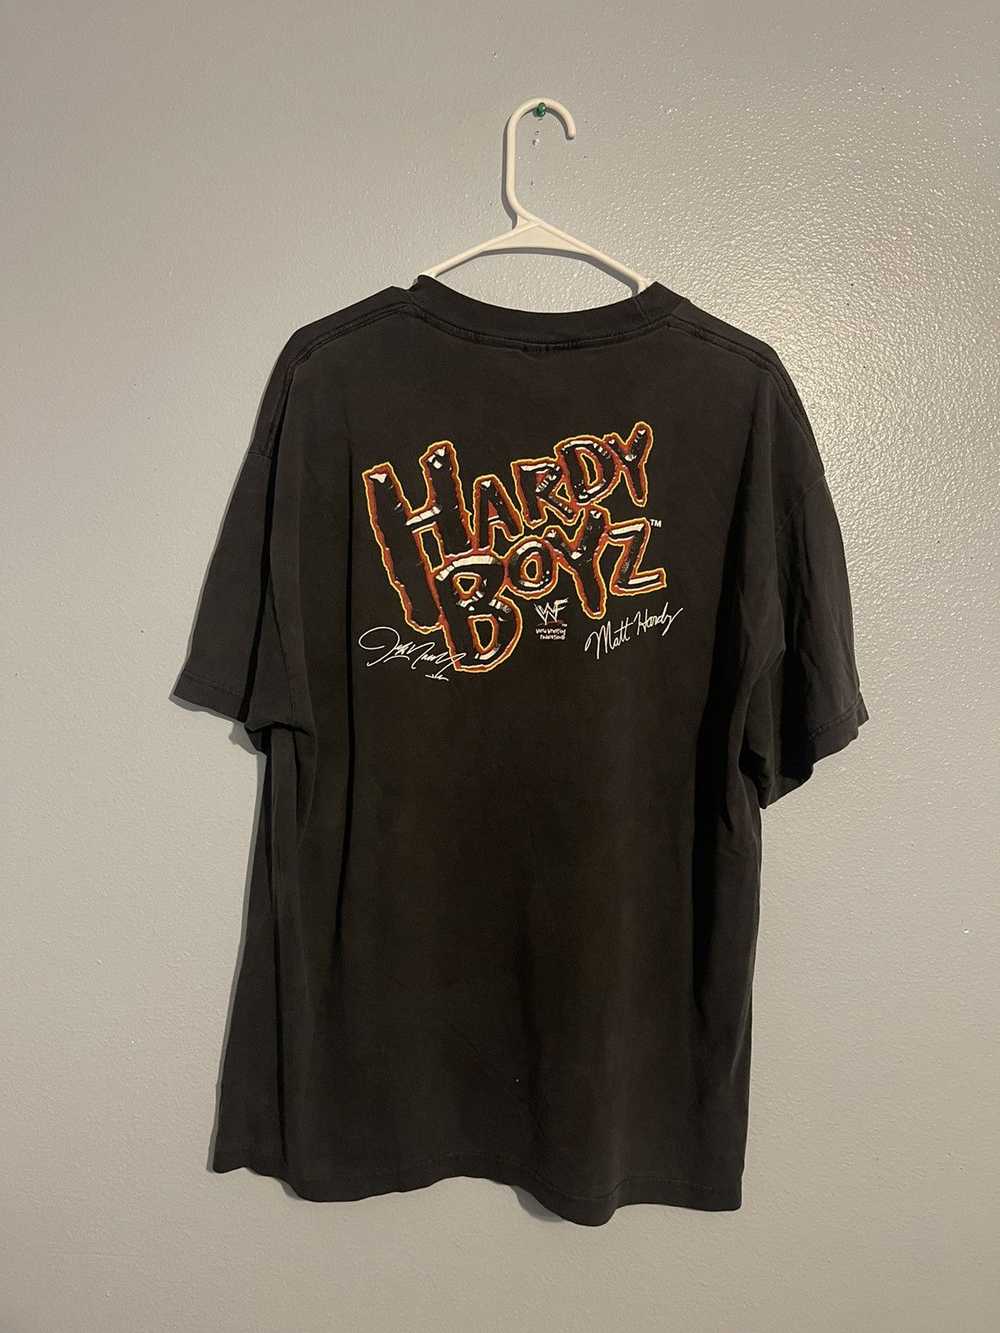 Vintage × Wwe × Wwf 2000 WWF Hardy Boyz Shirt - image 2